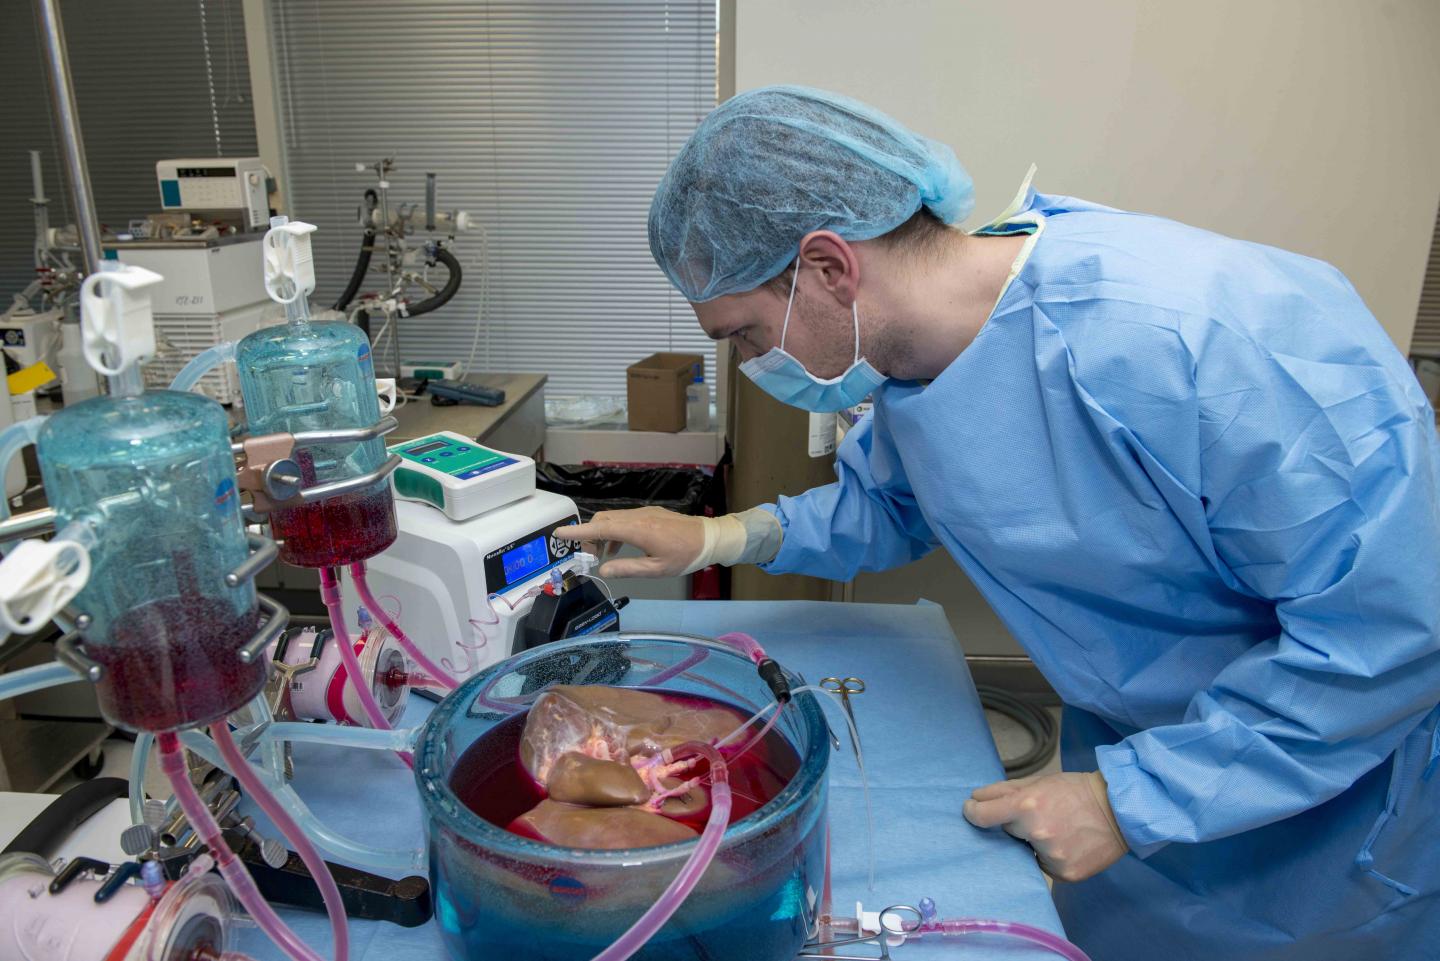 Supercooled Human Liver for Transplant